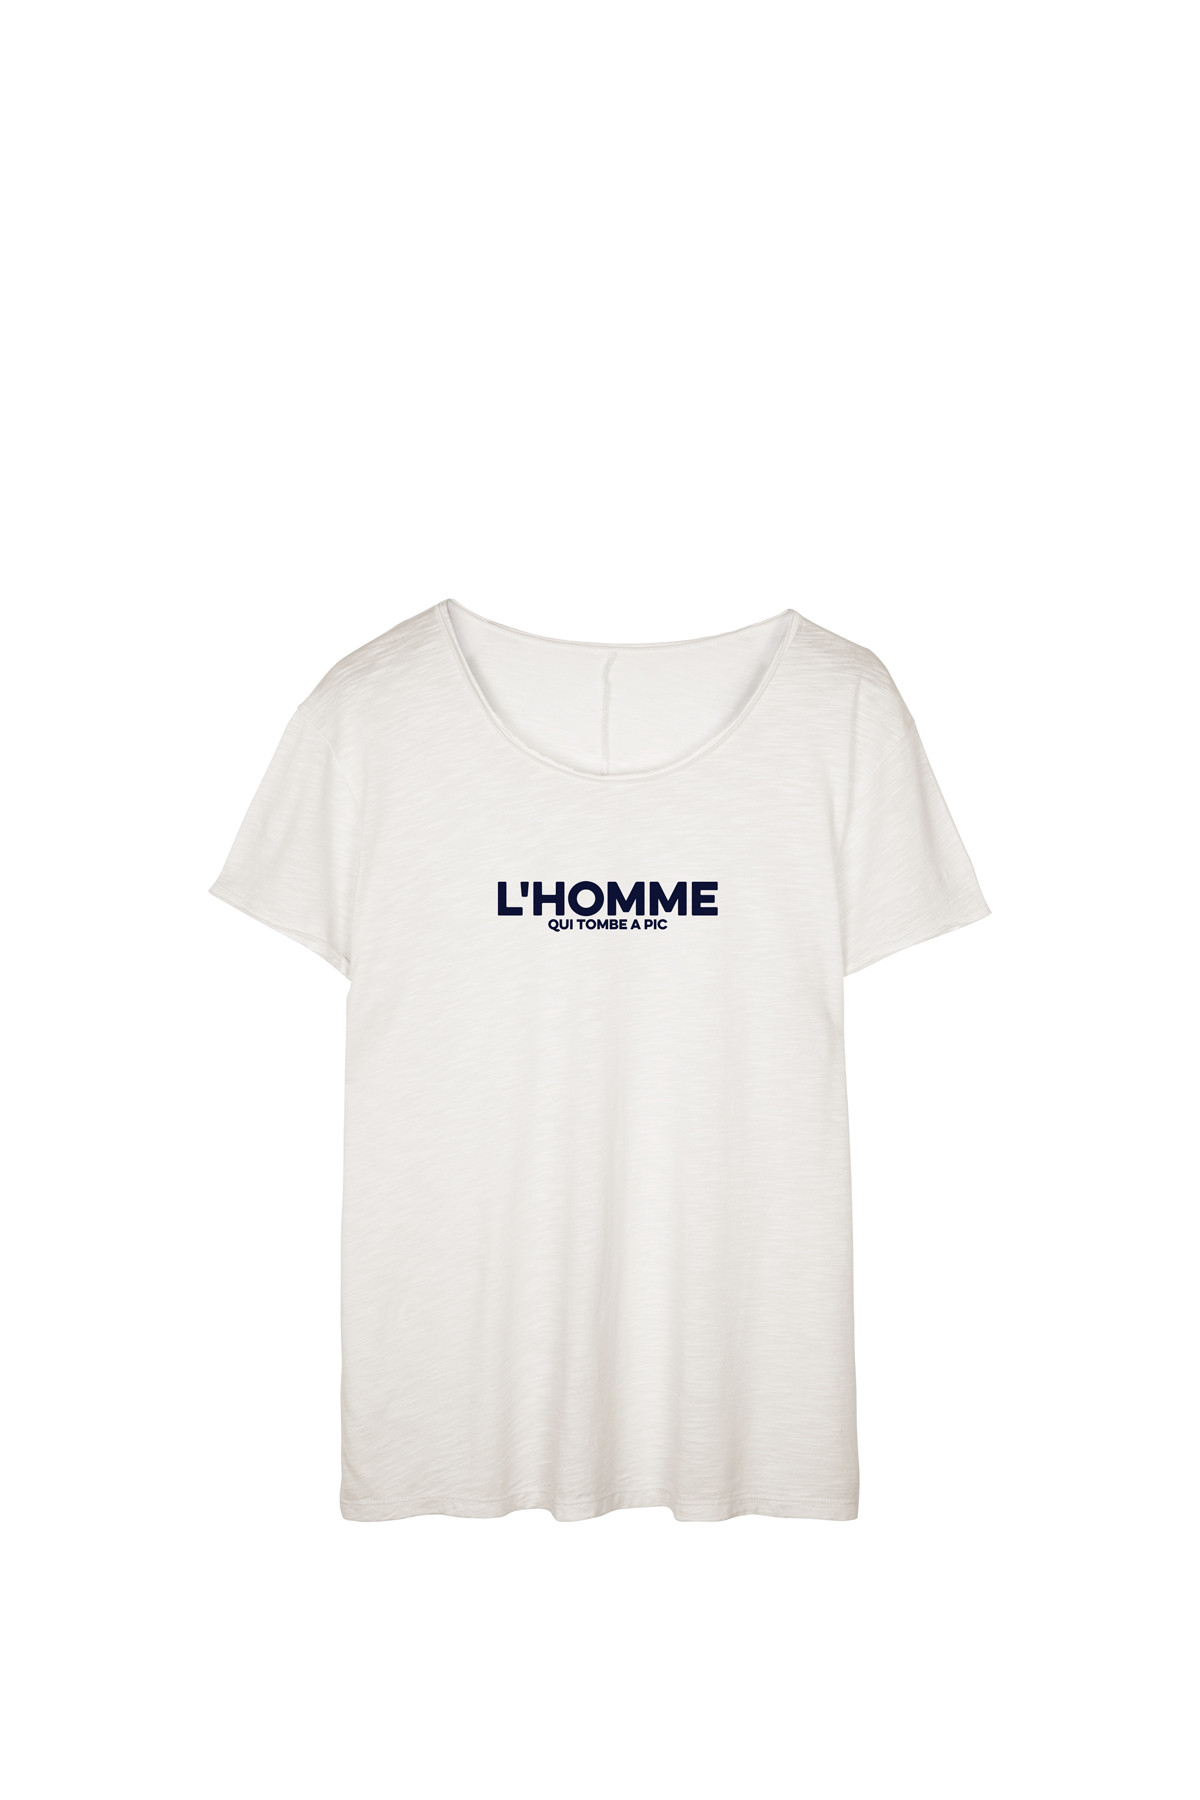 Photo de STOP Tshirt coton flammé L'HOMME QUI TOMBE A PIC chez French Disorder